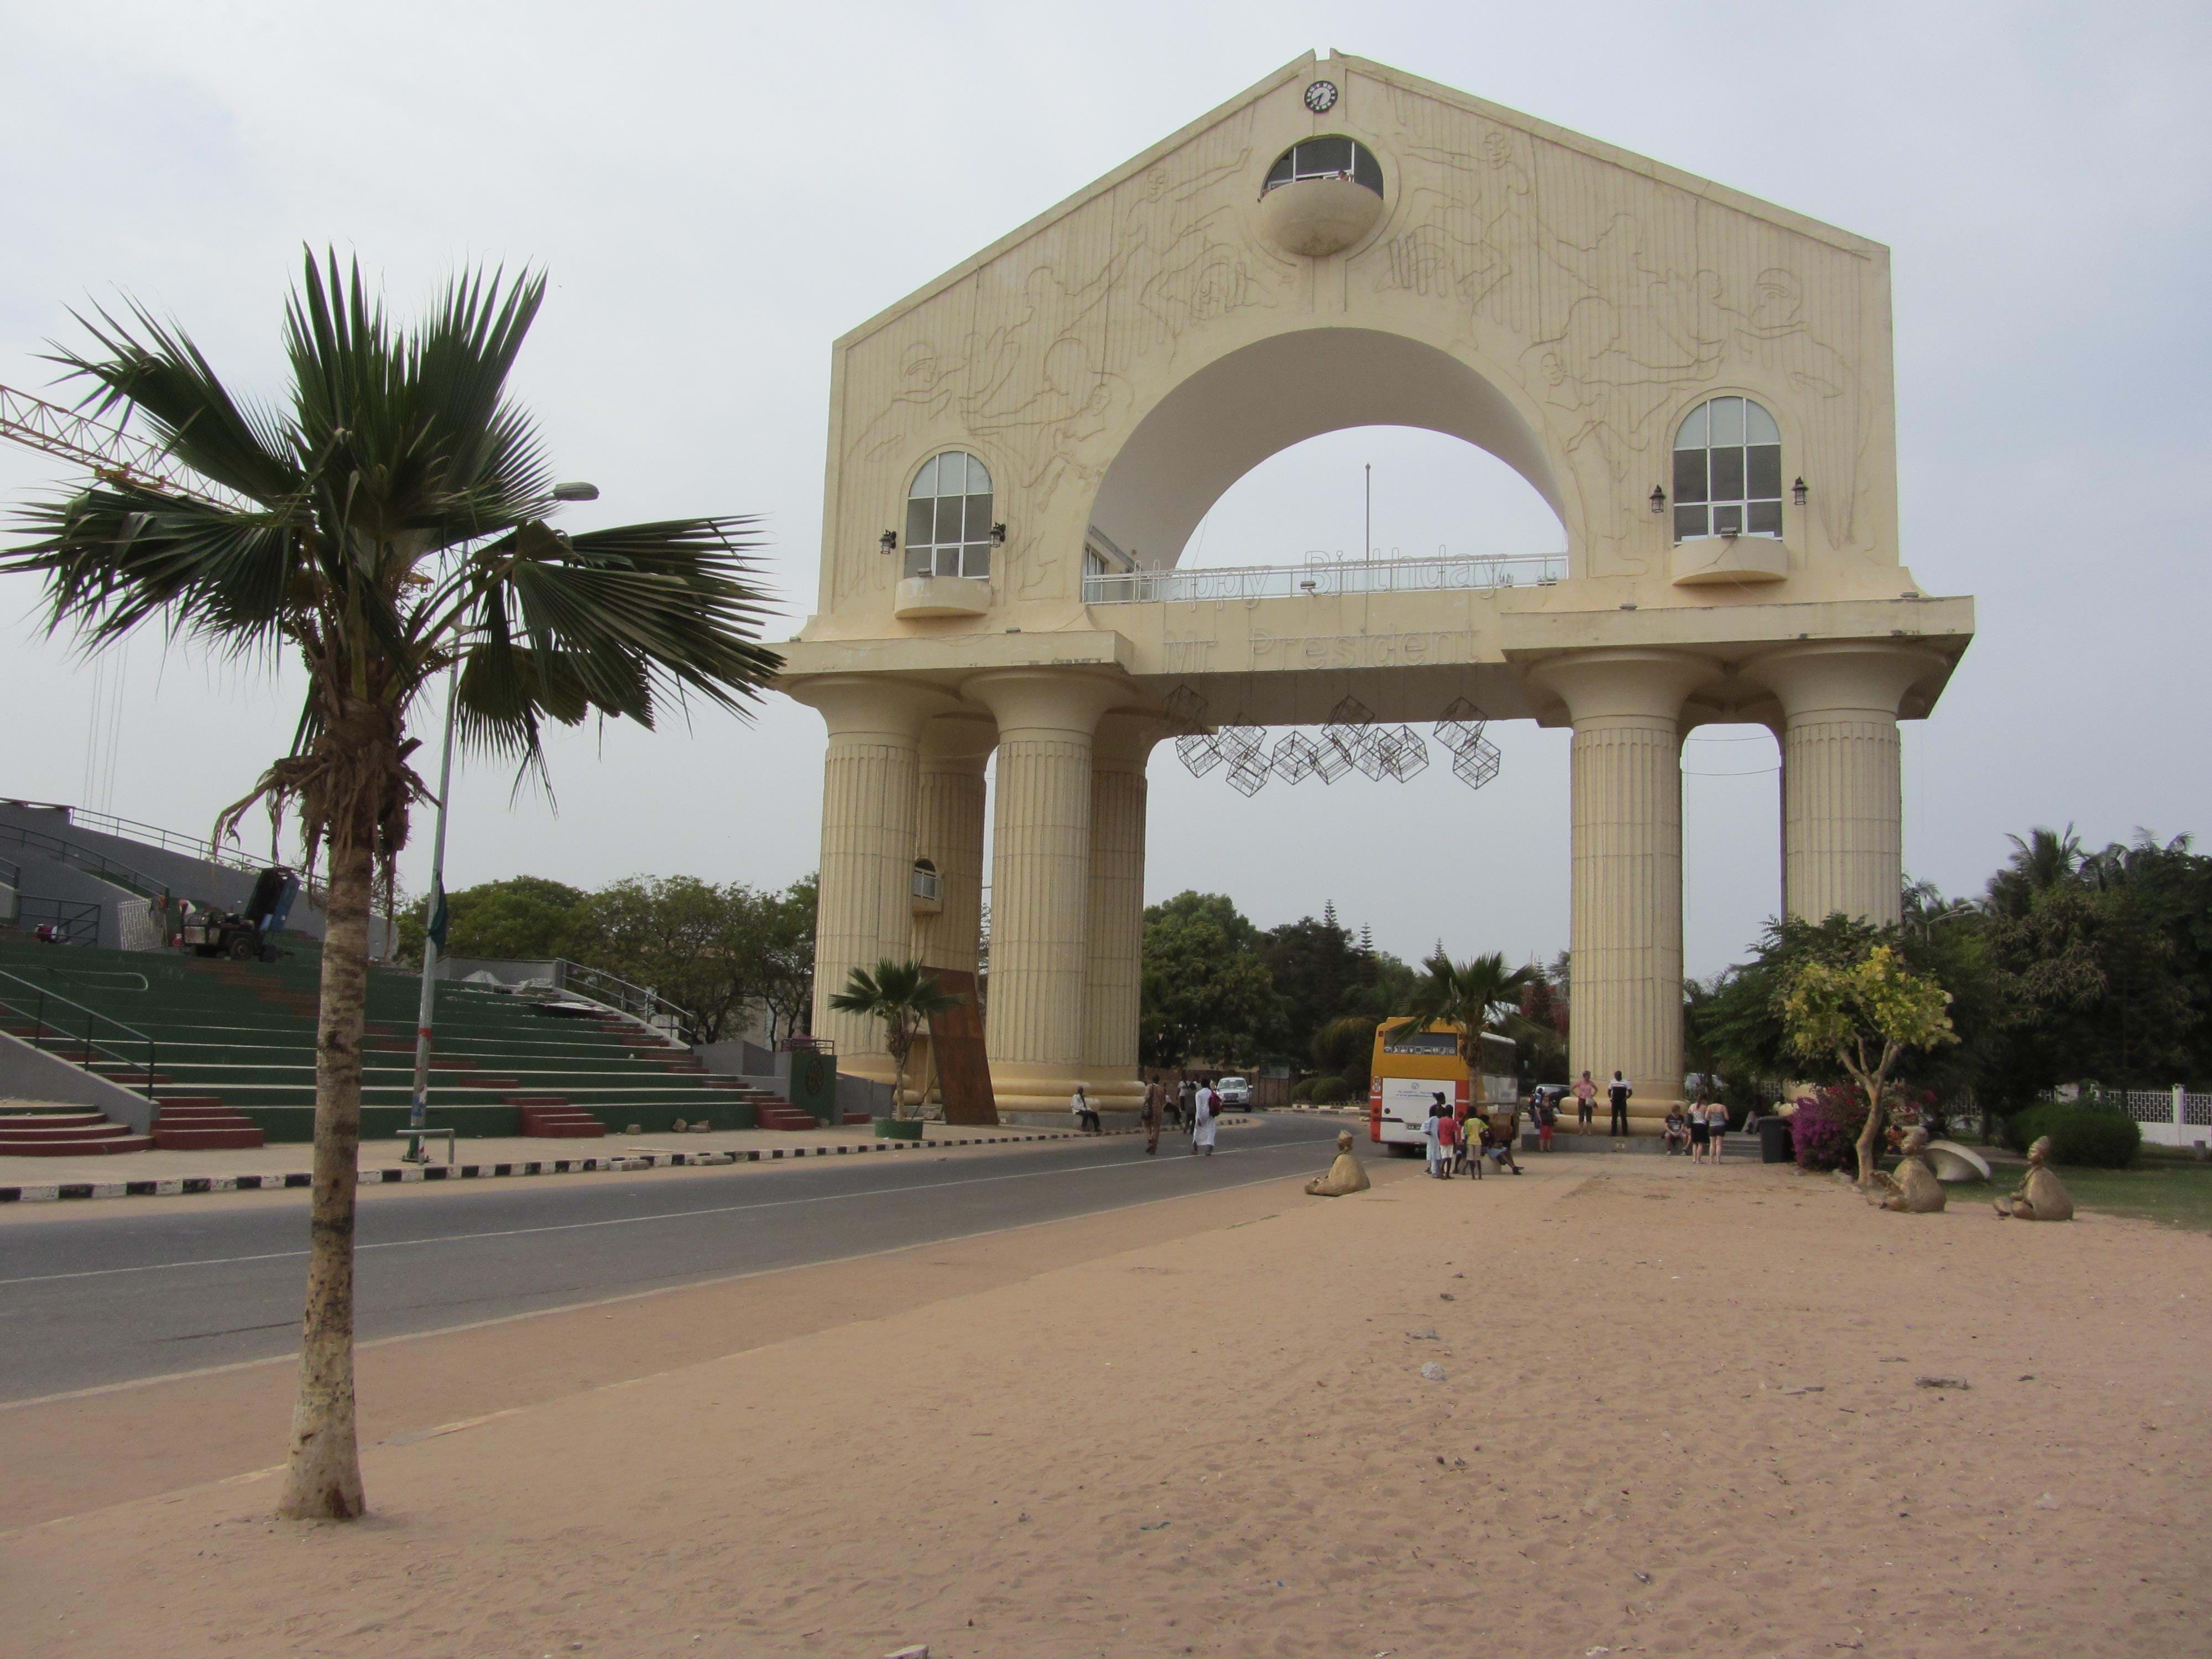 Banjul Gambia